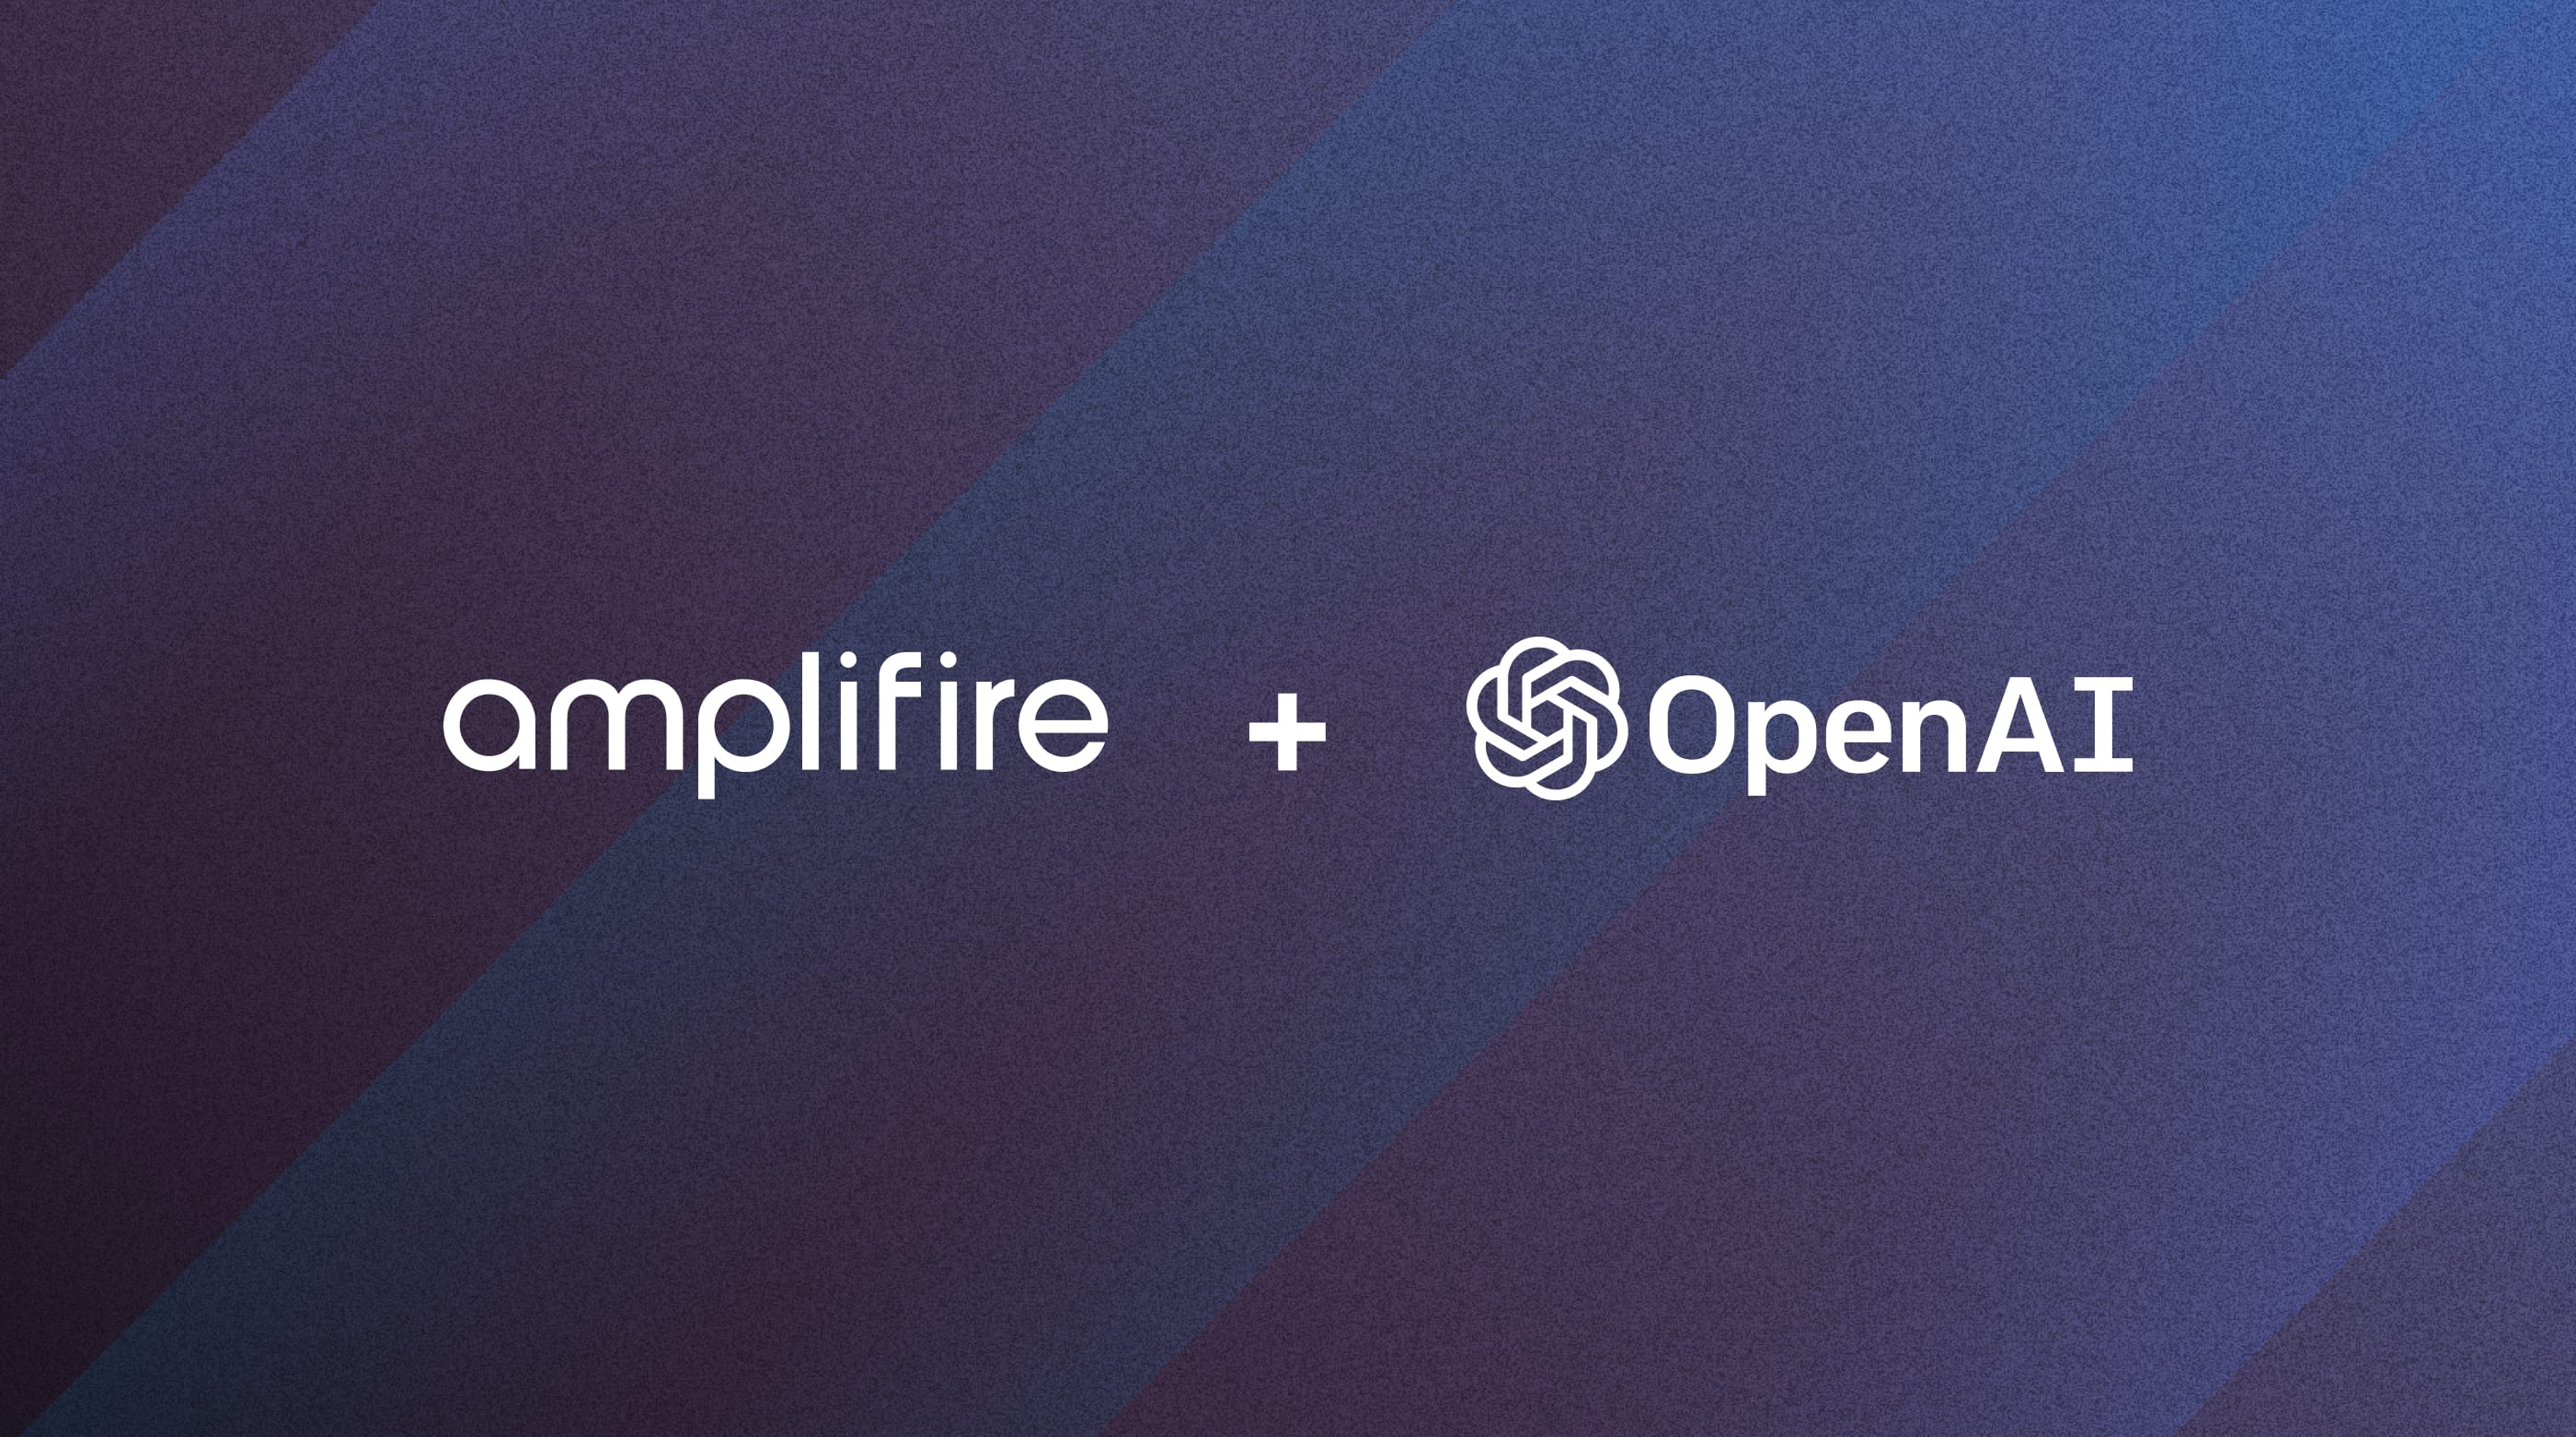 Amplifire and OpenAI logos